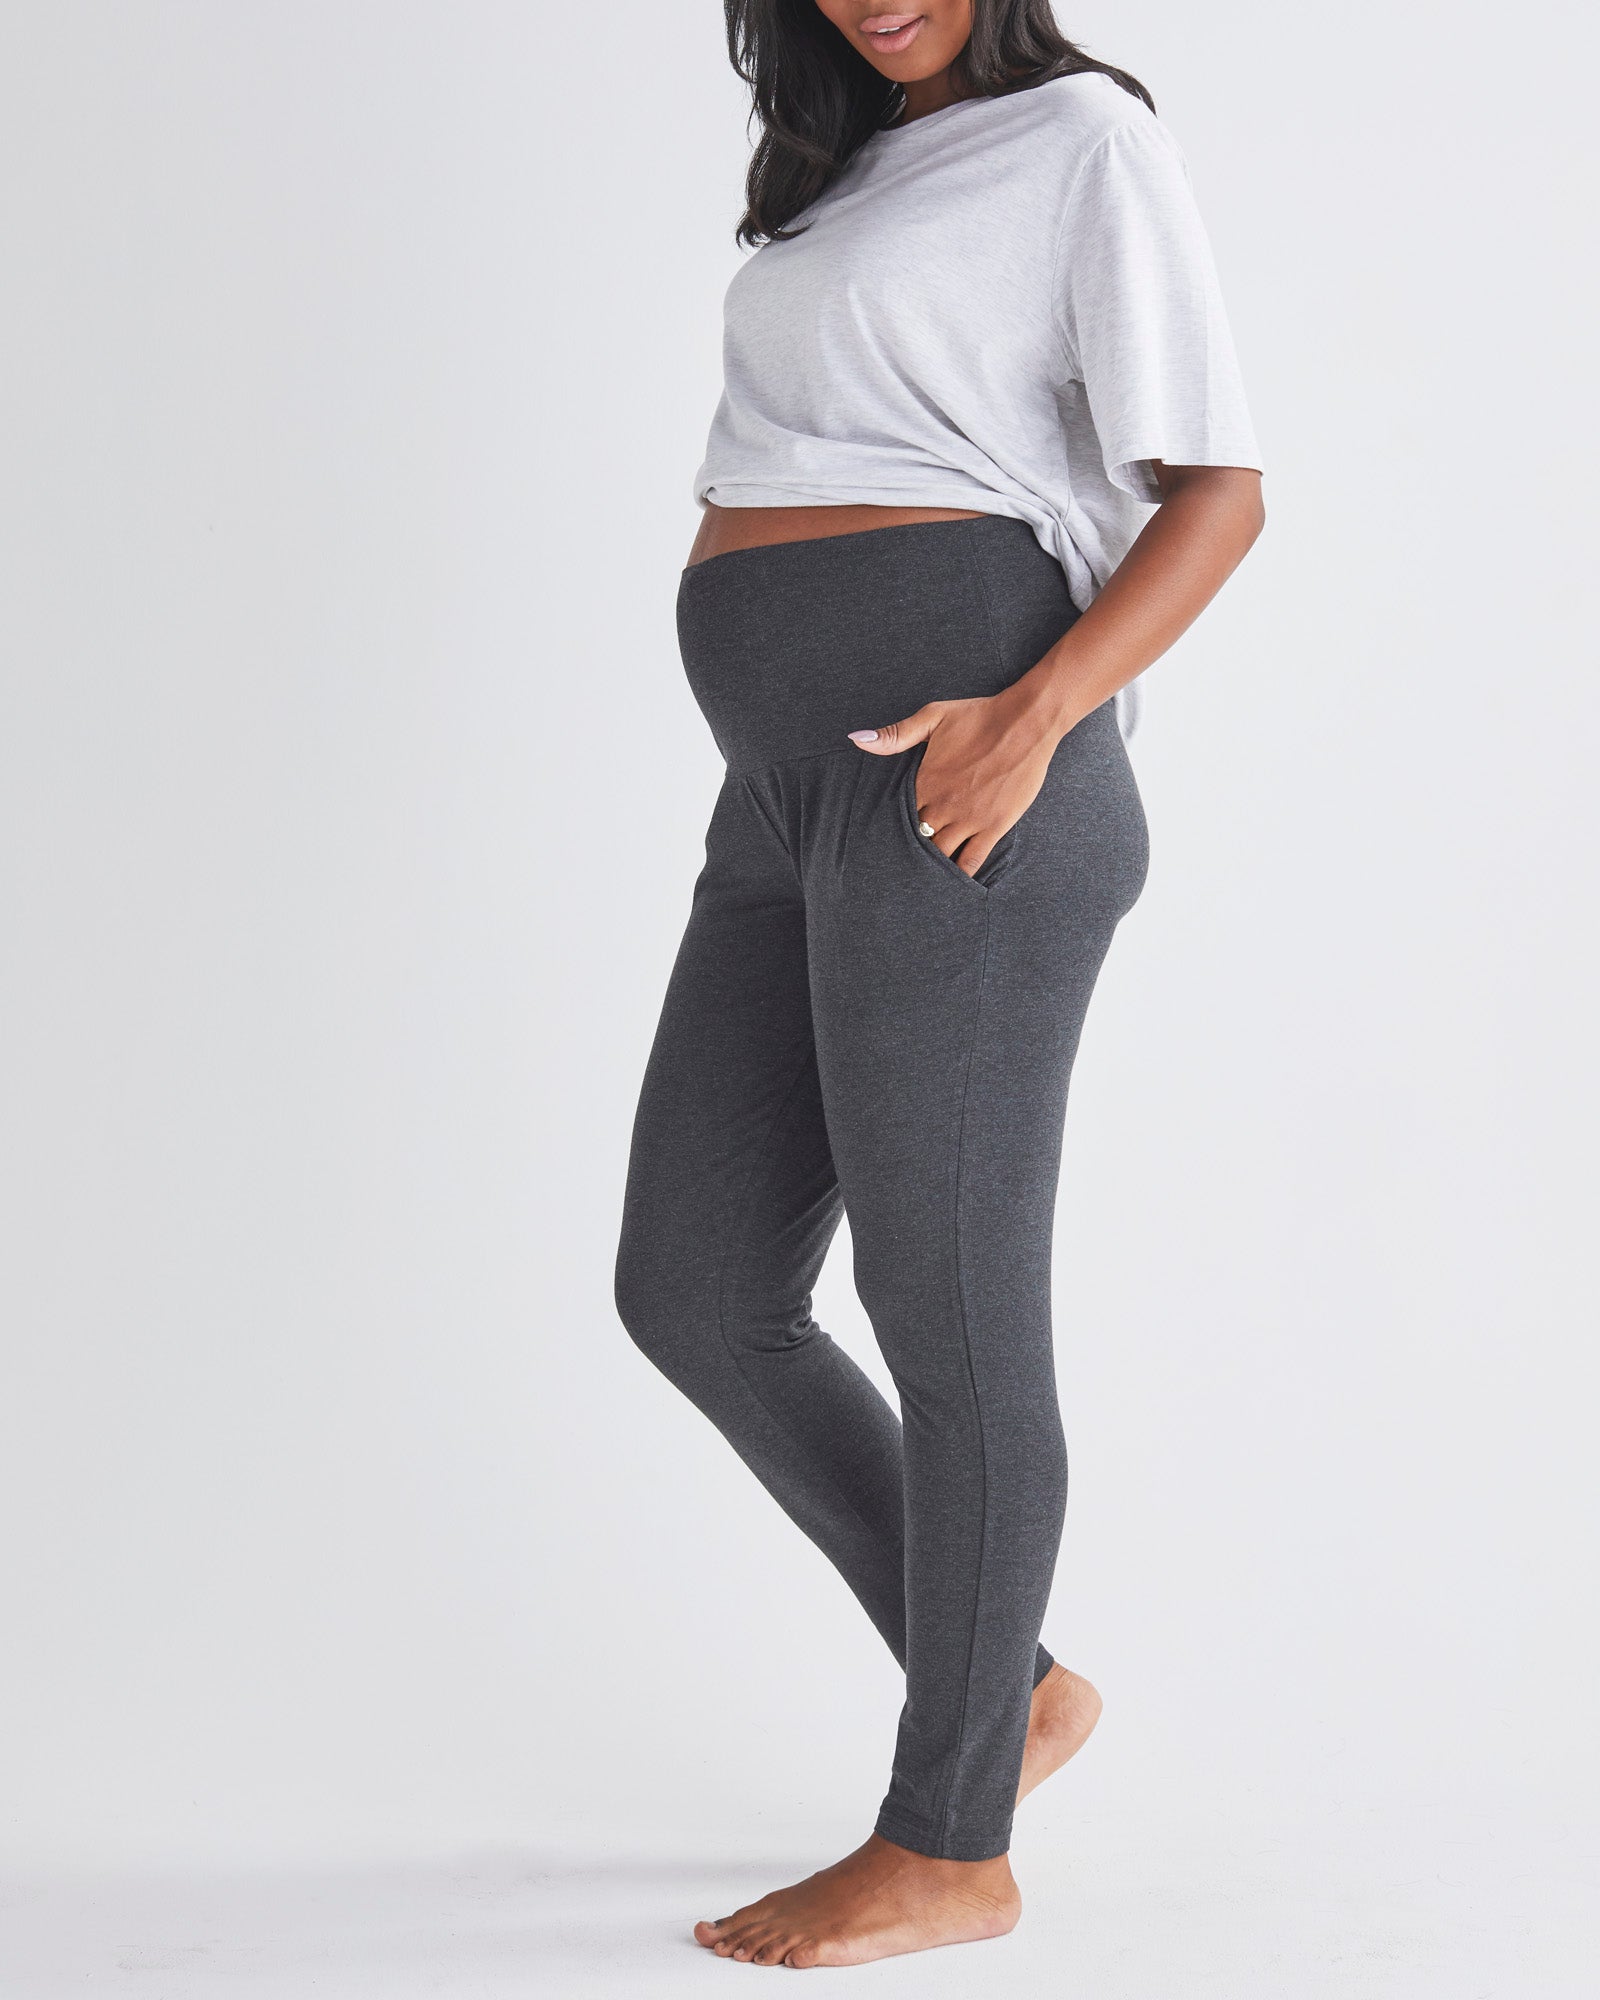 Women's Maternity Pants Pregnancy Lounge Yoga Pajamas Jogger Pants with  Pockets